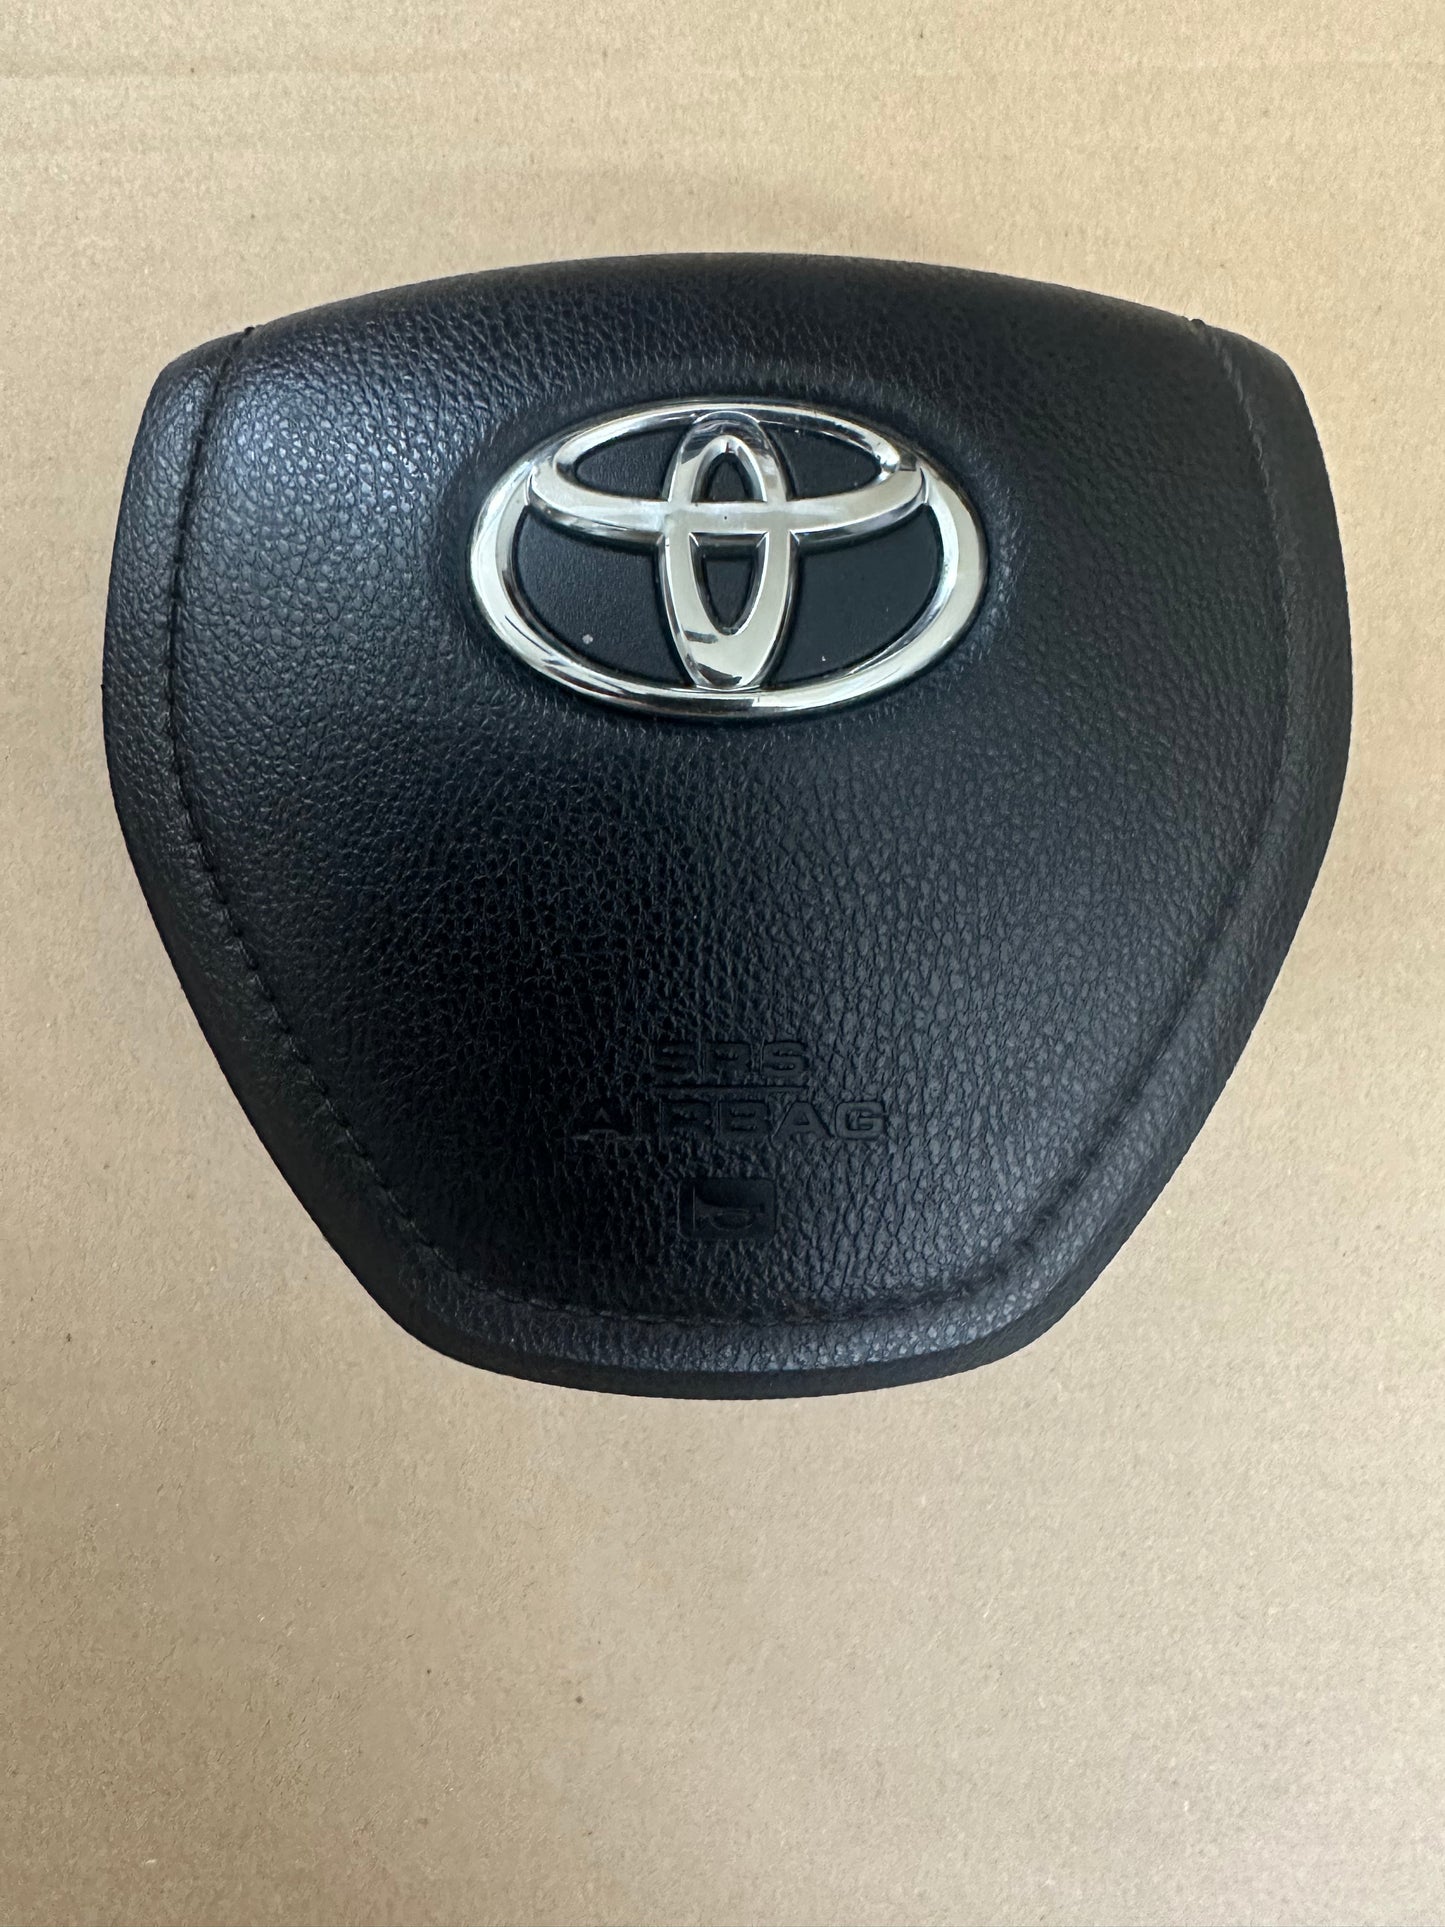 2014 2015 2016 2017 2018 2019Used OEM Driver Steering Wheel Airbag for Toyota Corolla and RAV4